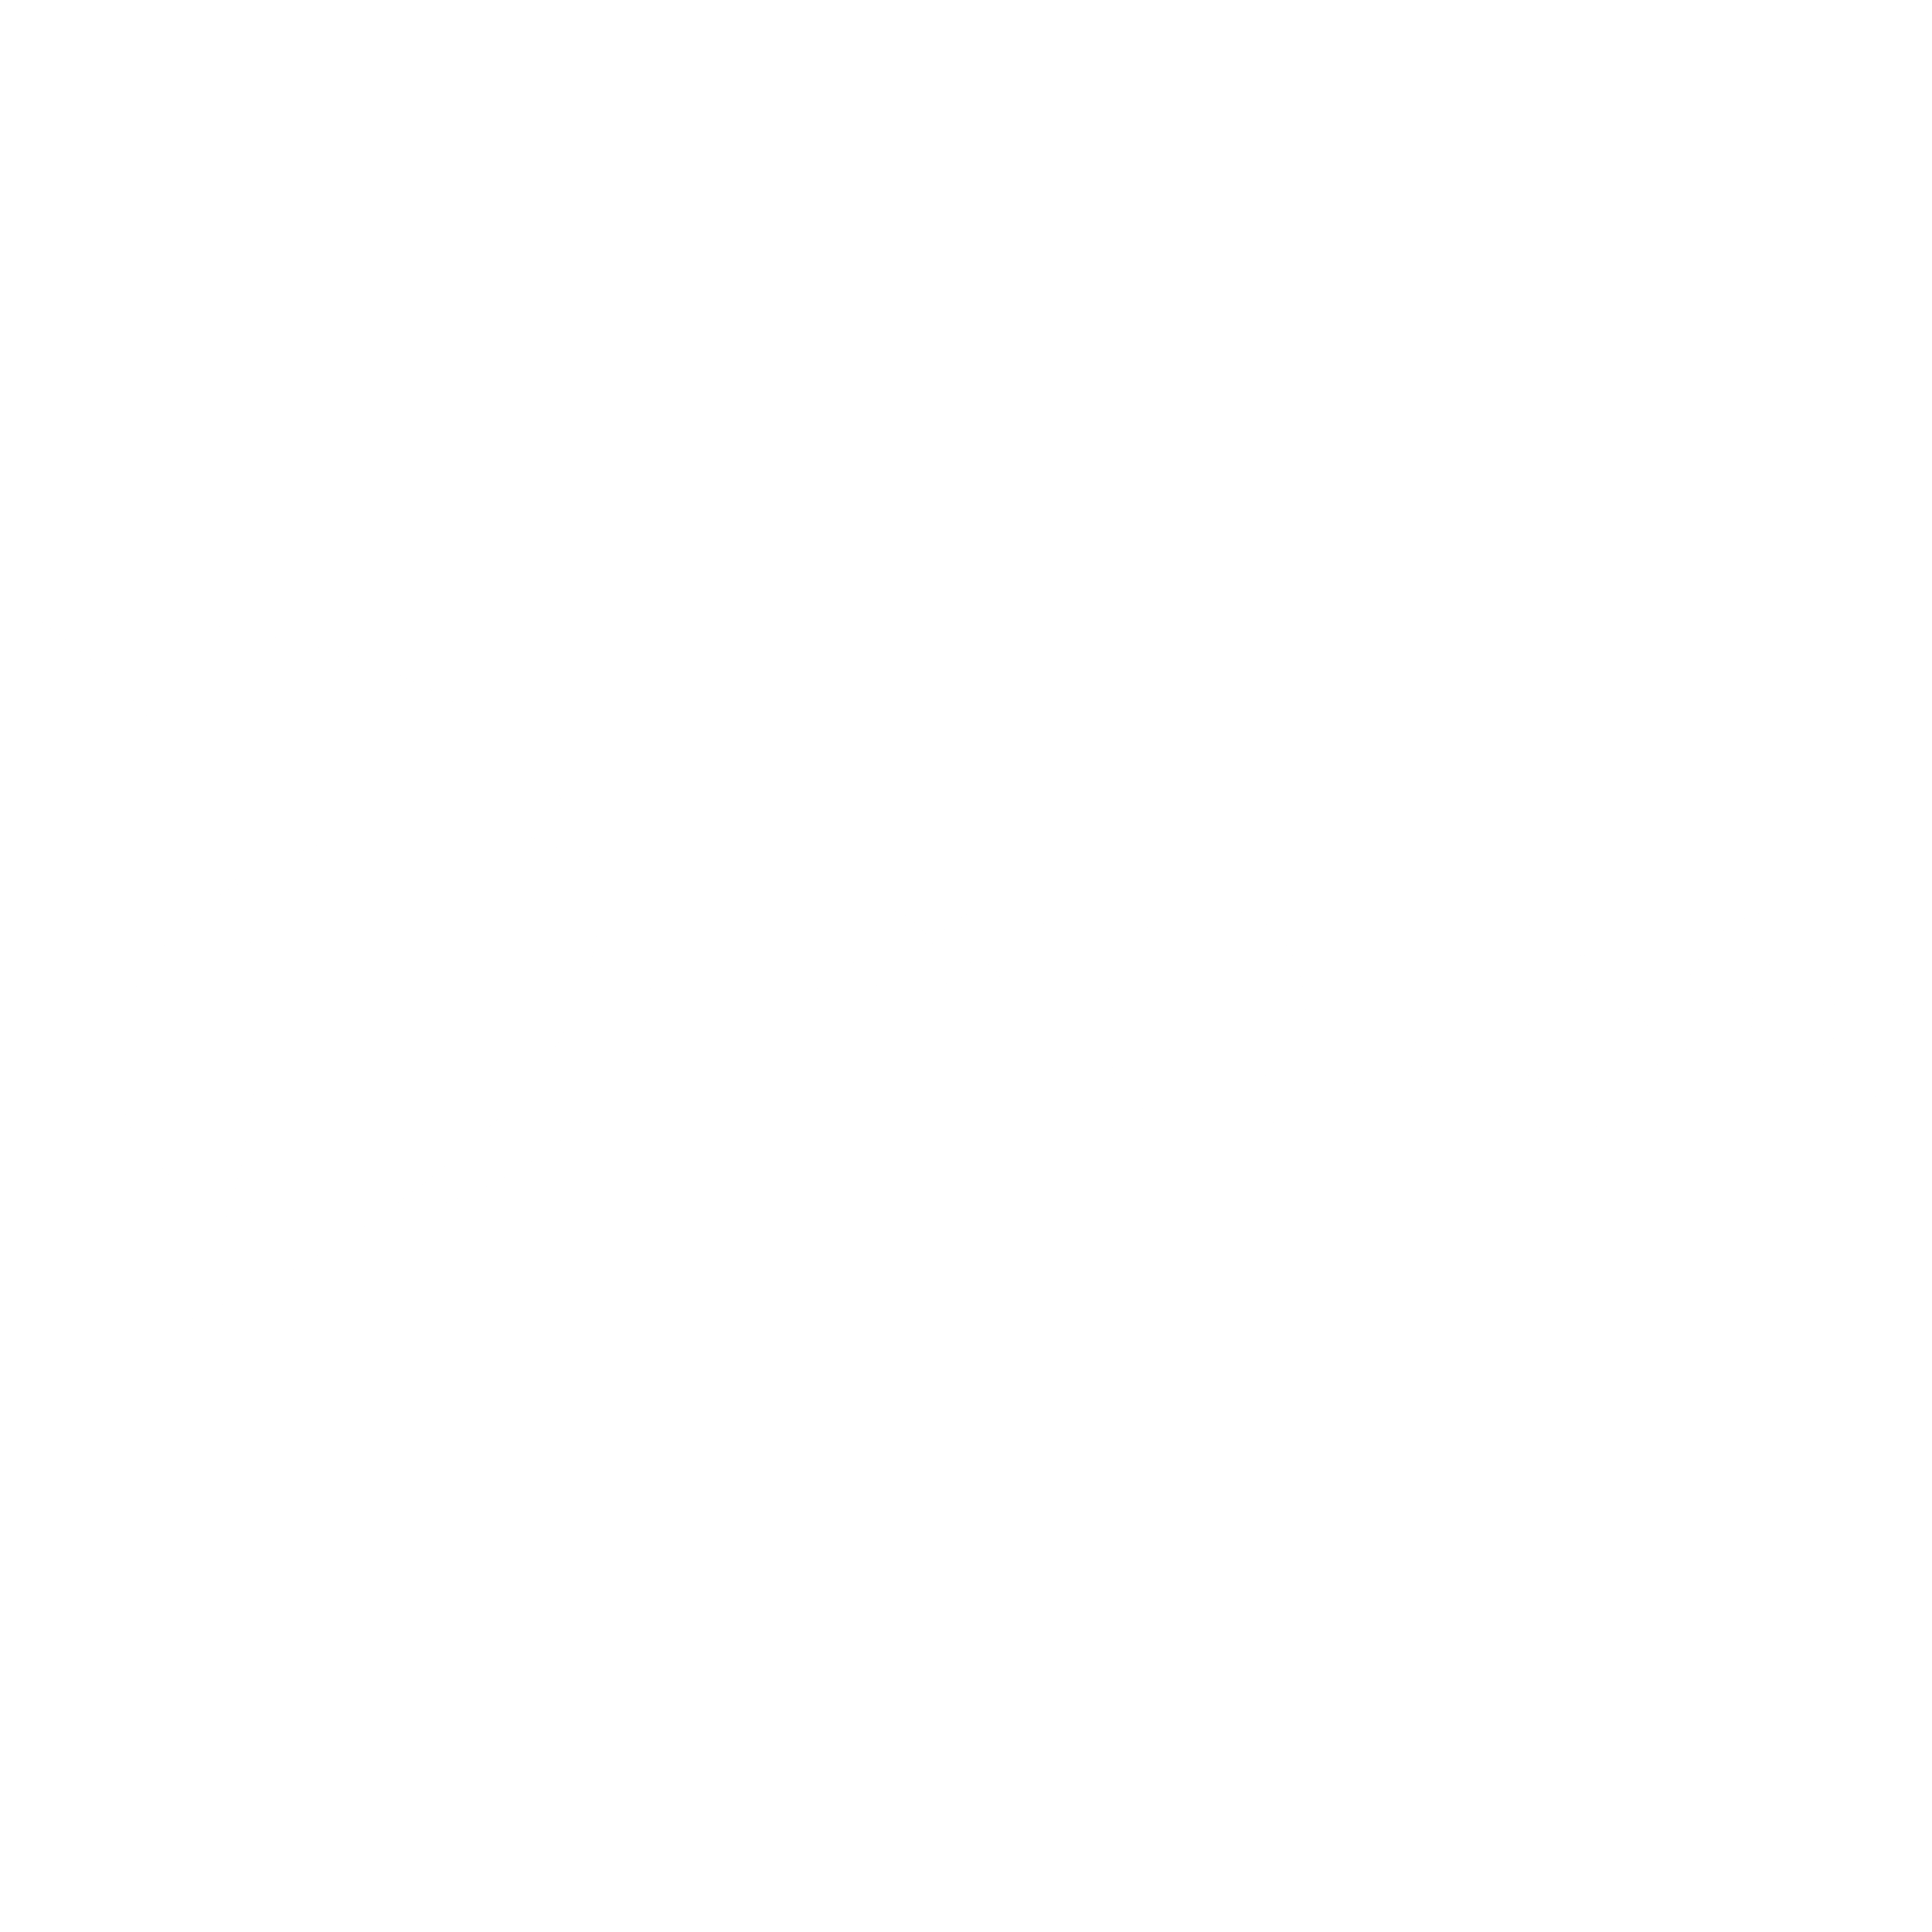 Metso Logo - Metso Logo PNG Transparent & SVG Vector